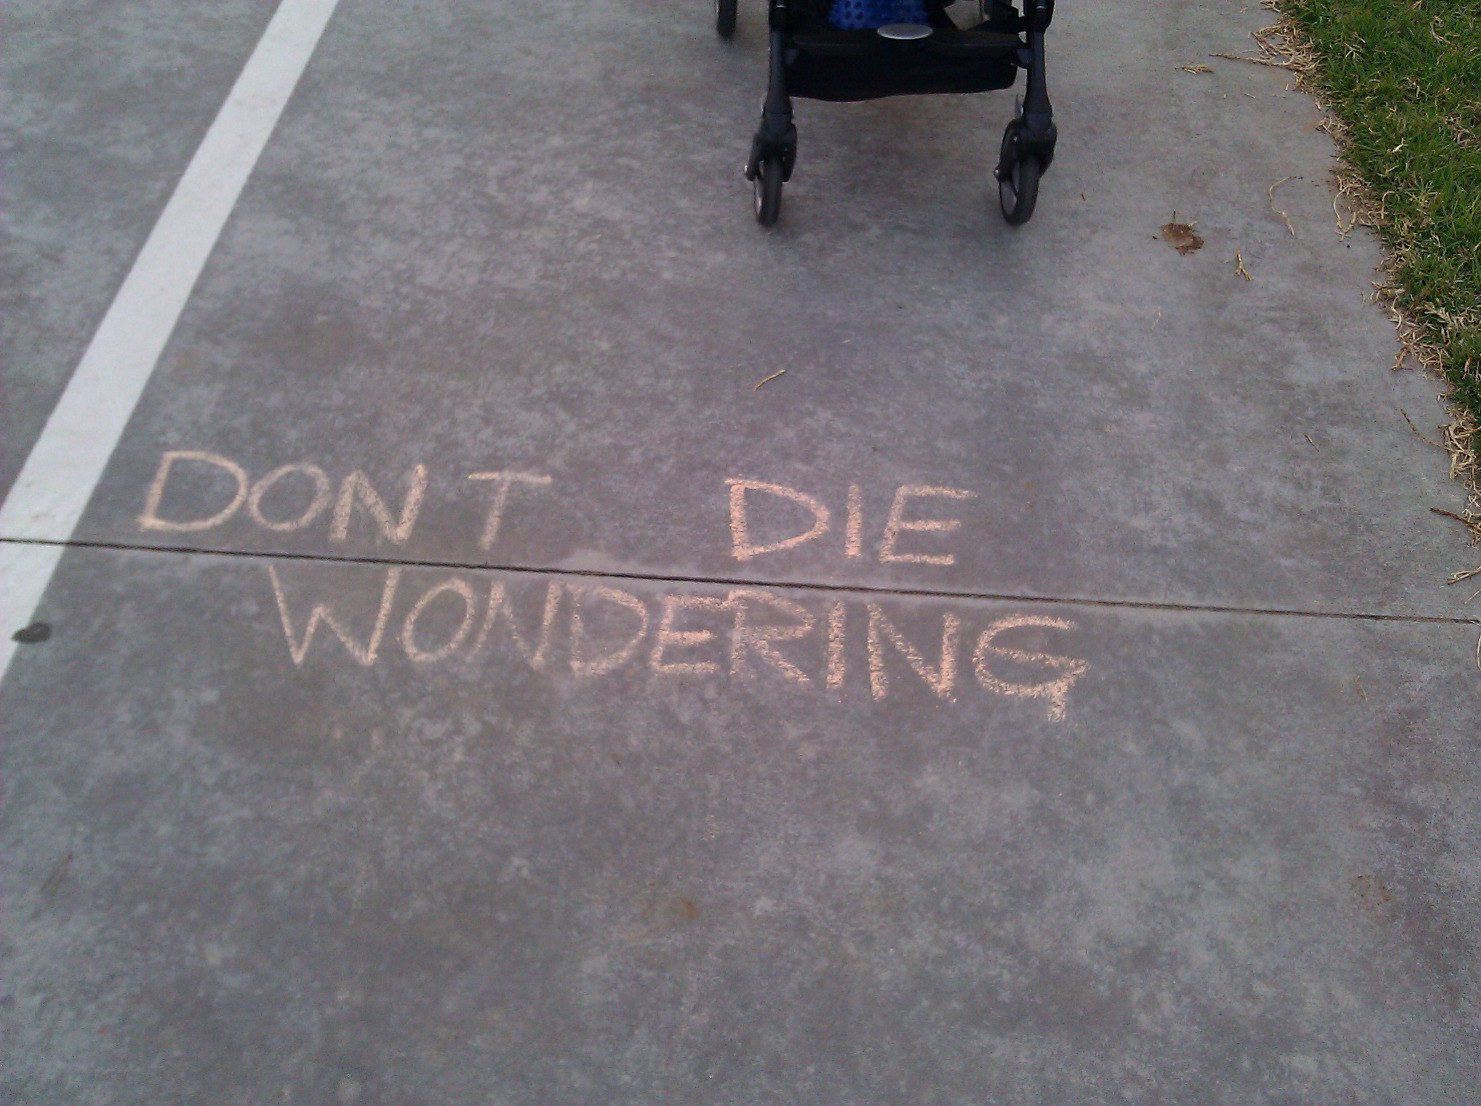 Written in chalk on a bike path: Don't Die Wondering.